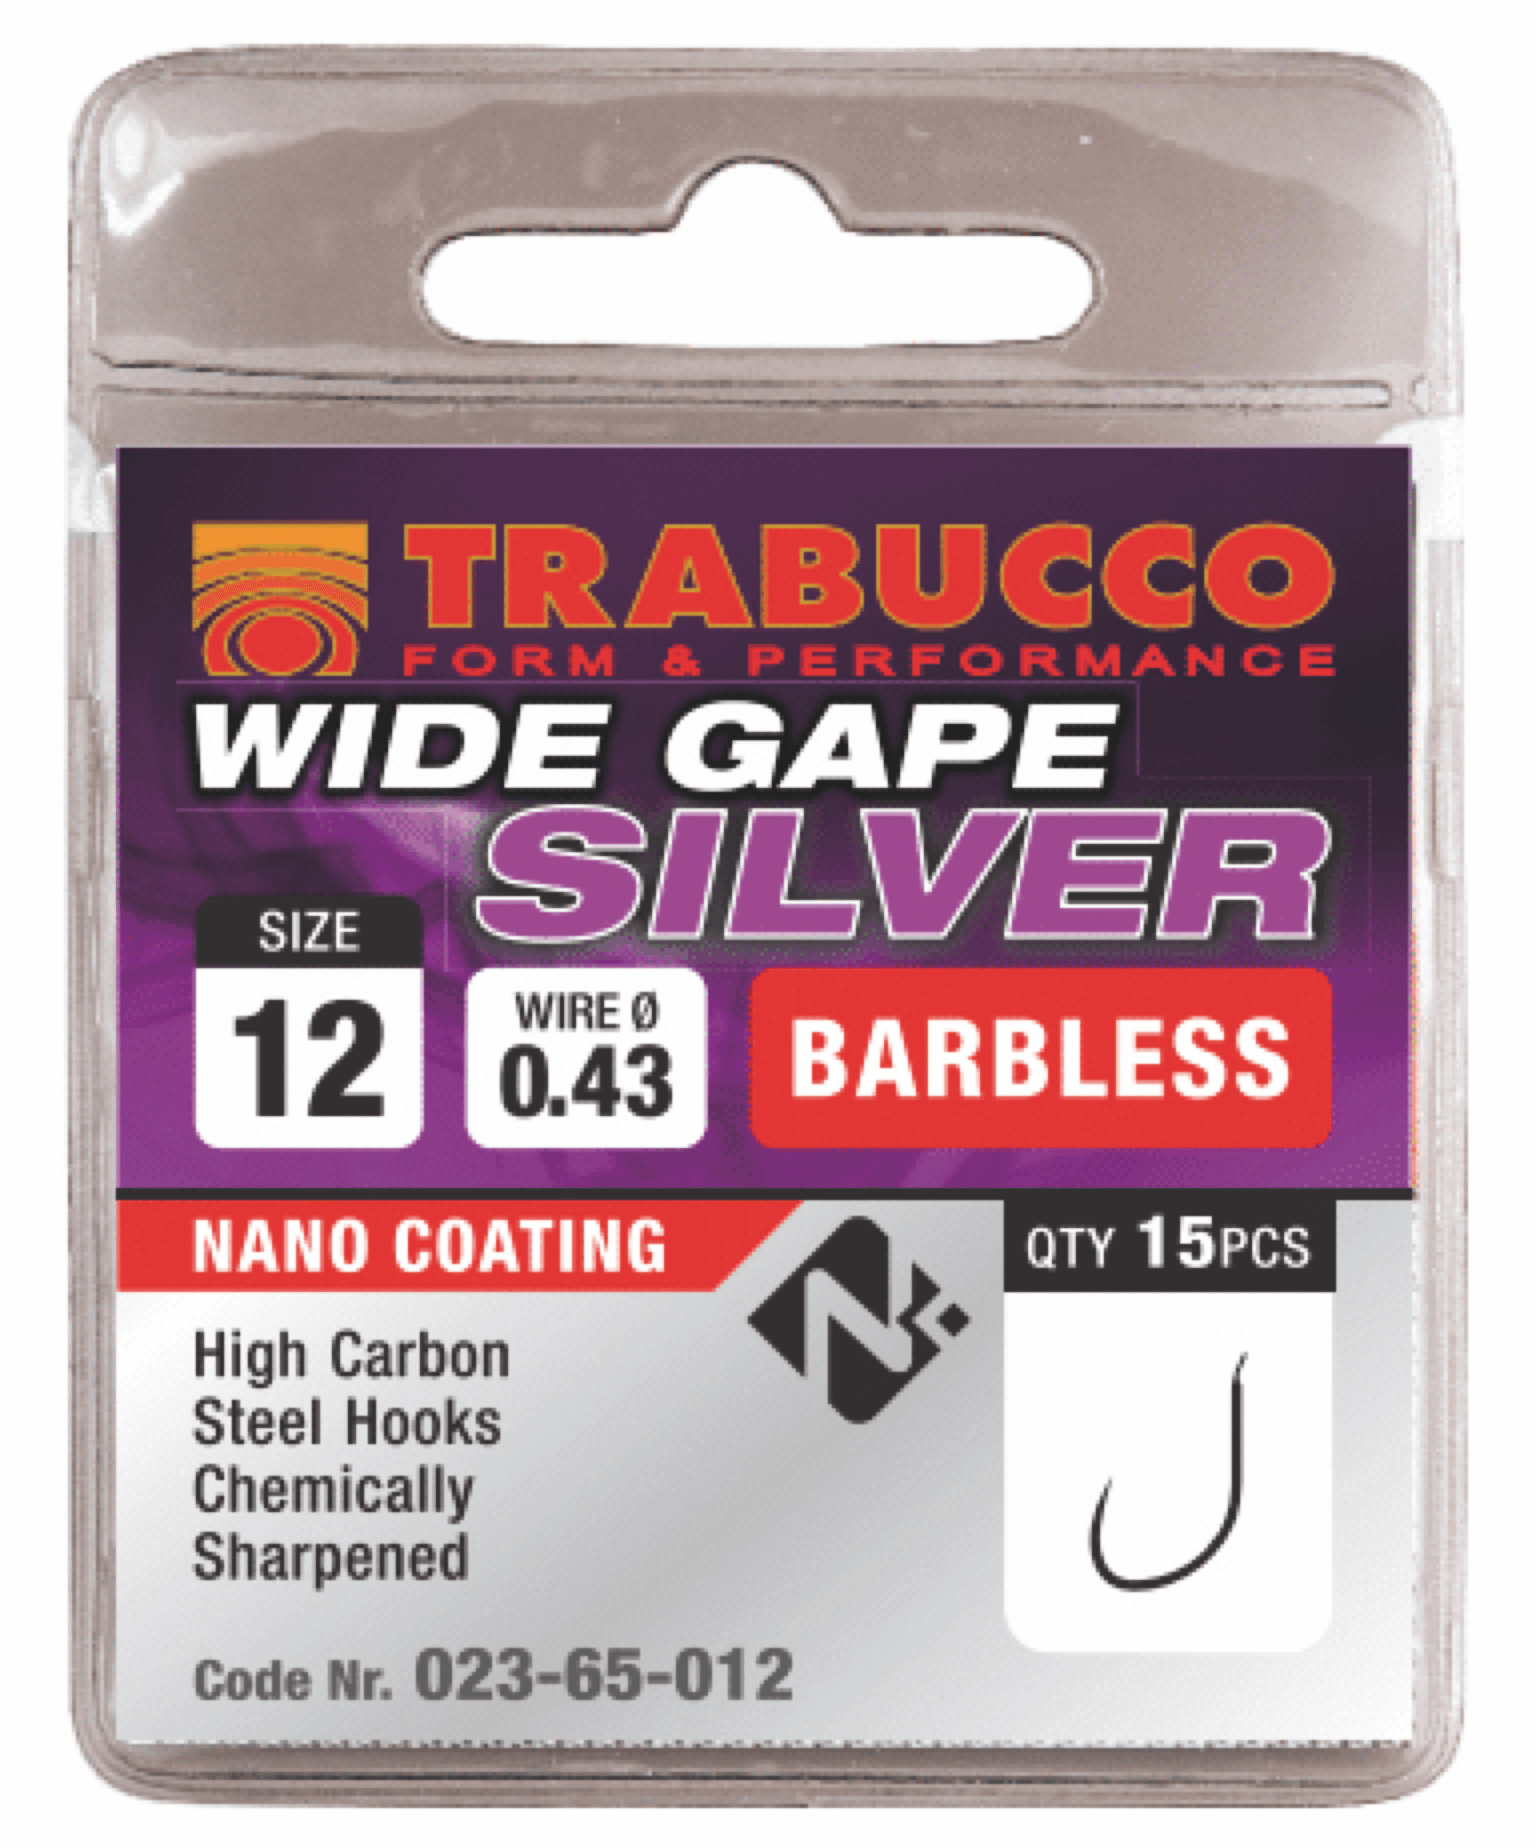 Trabucco wide gape silver